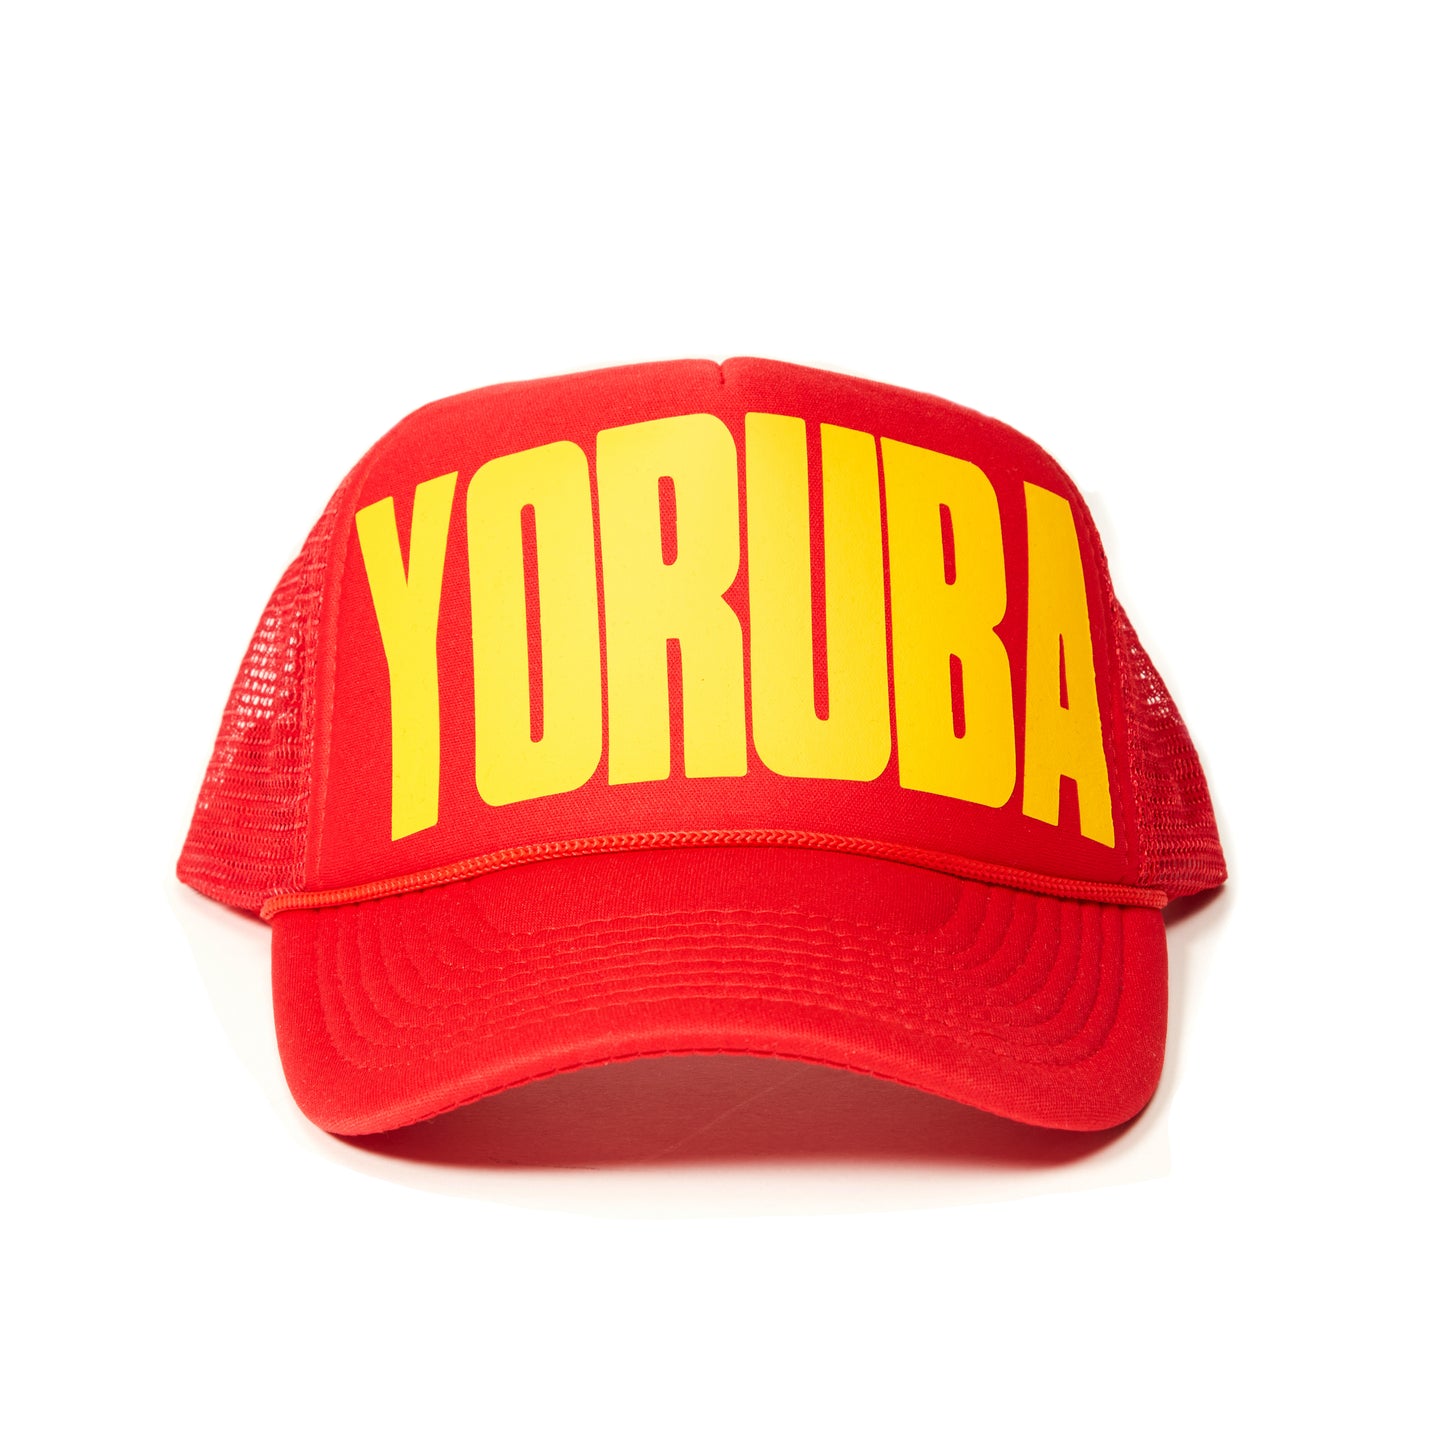 Yoruba Trucker Hat